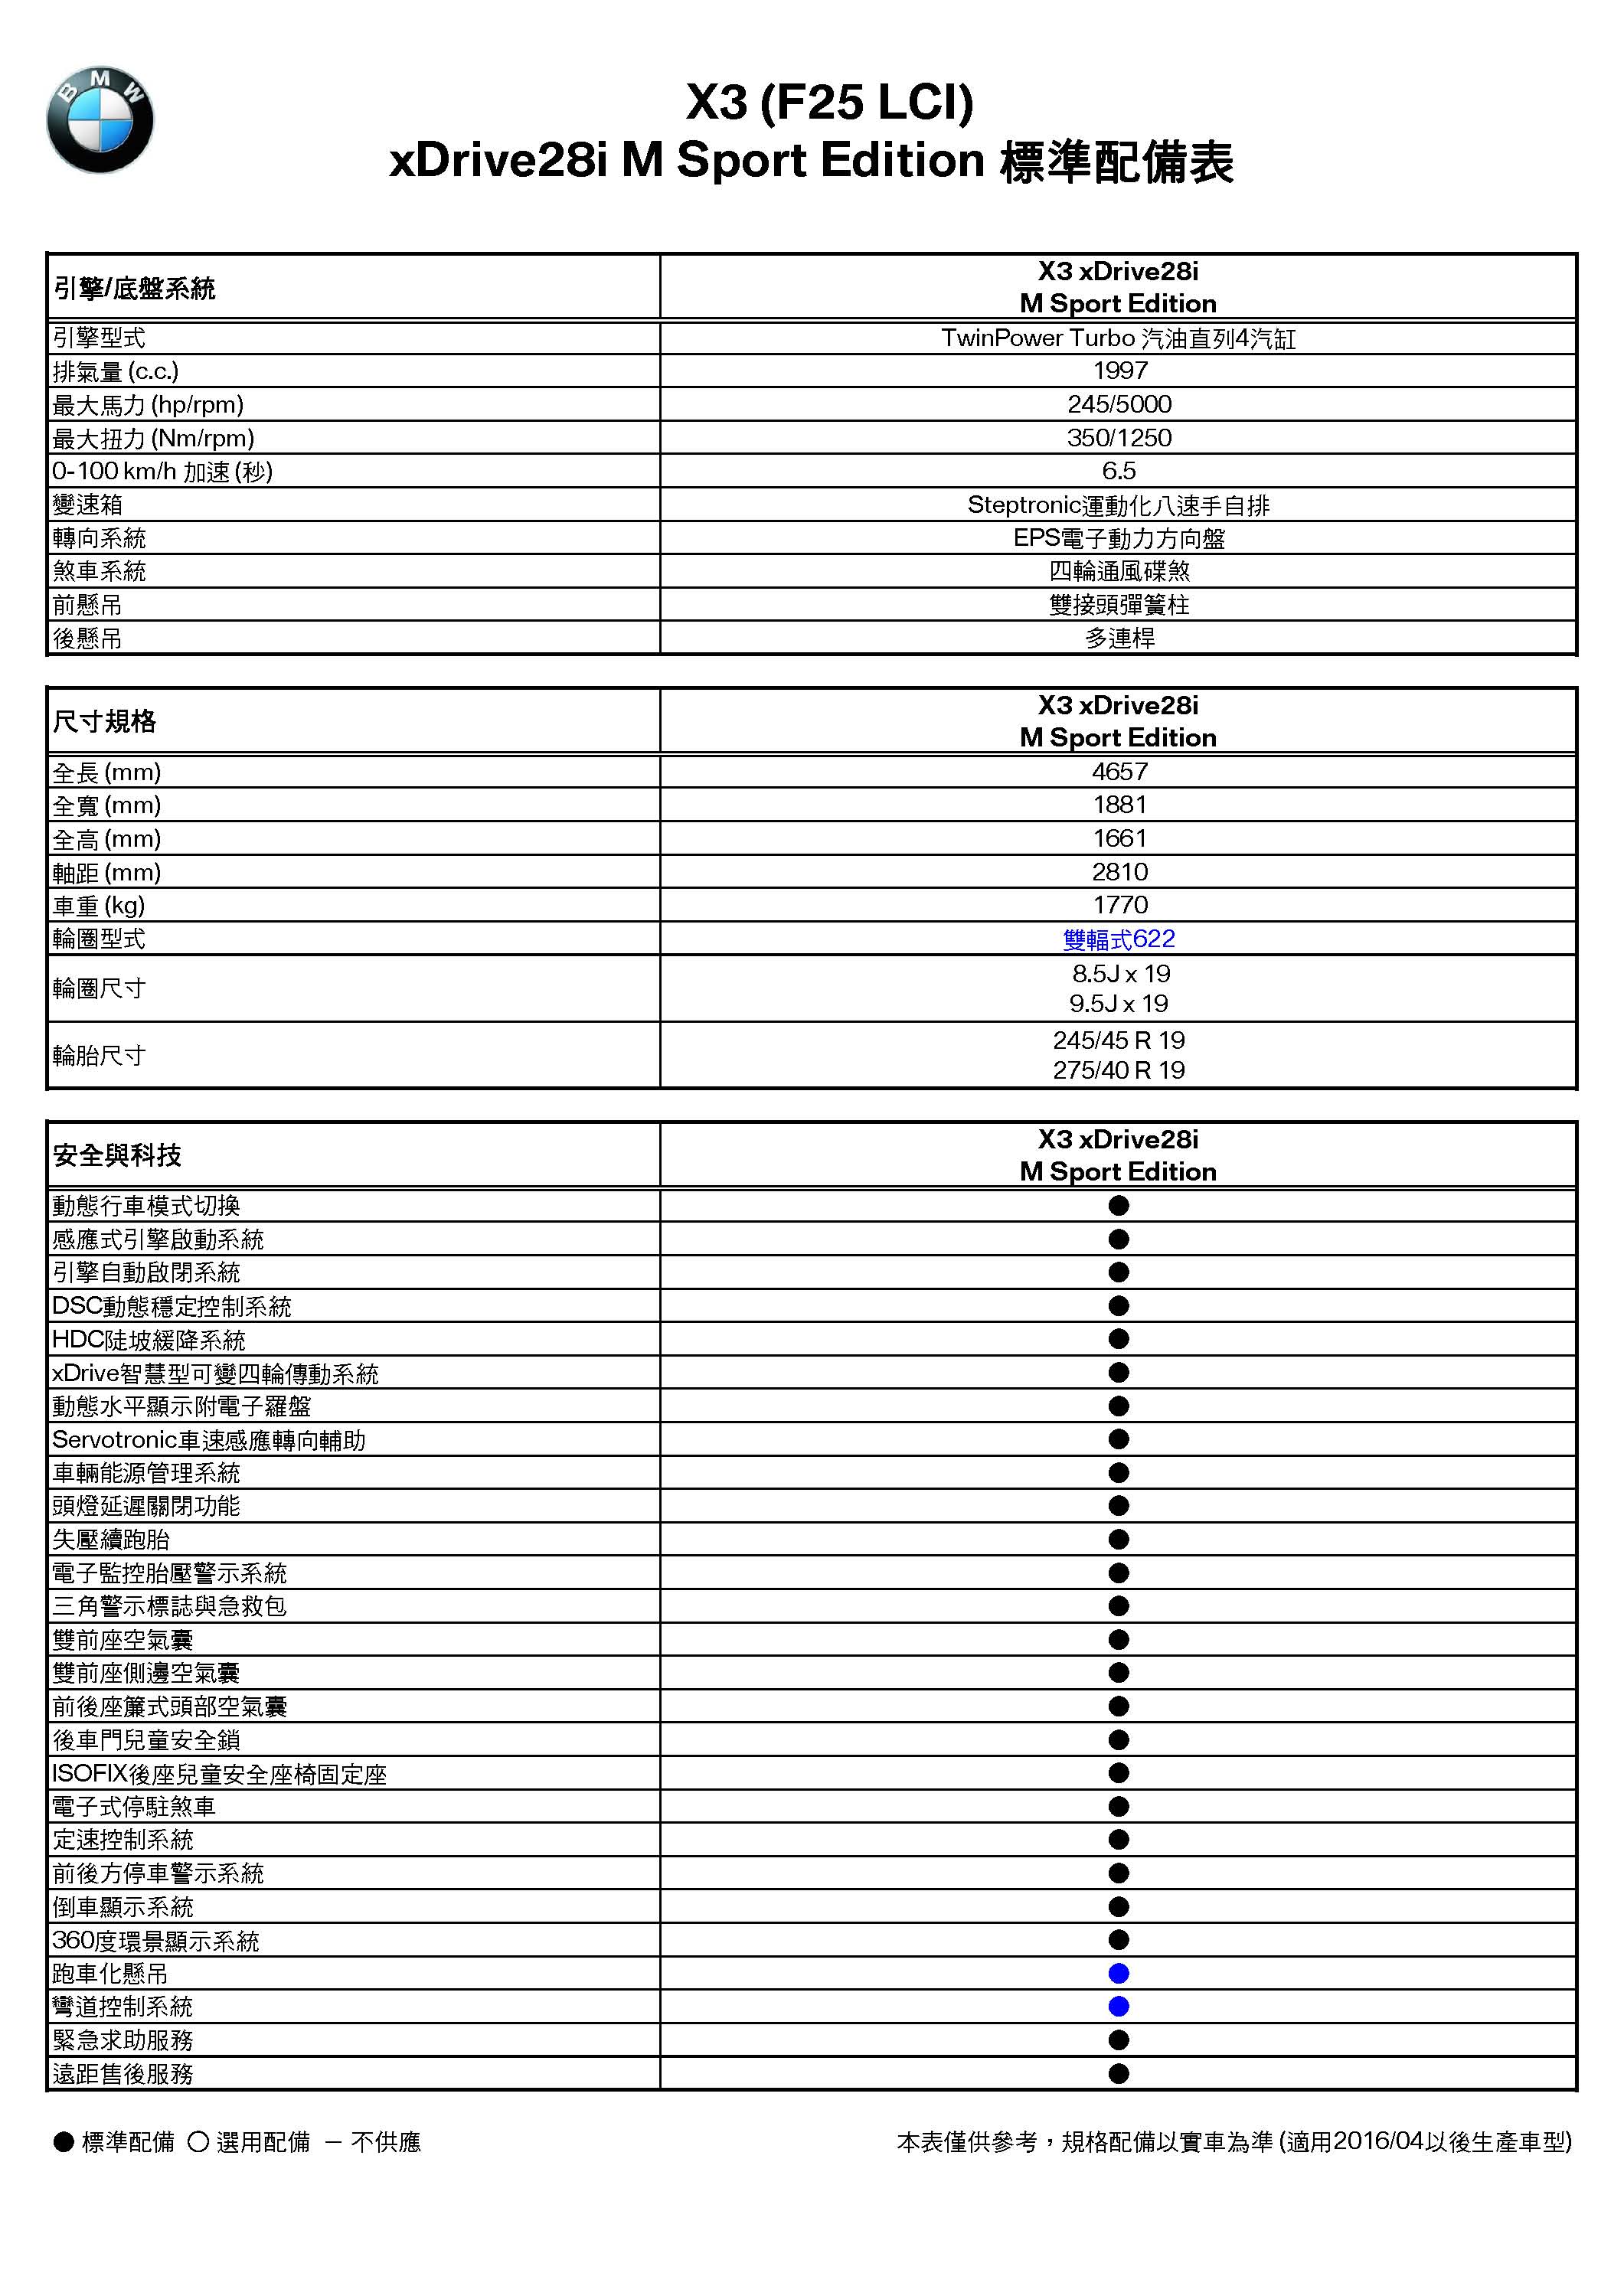 X3(F25 LCI) 28i M Sport Edition 規格配備表(2016-04)_頁面_1